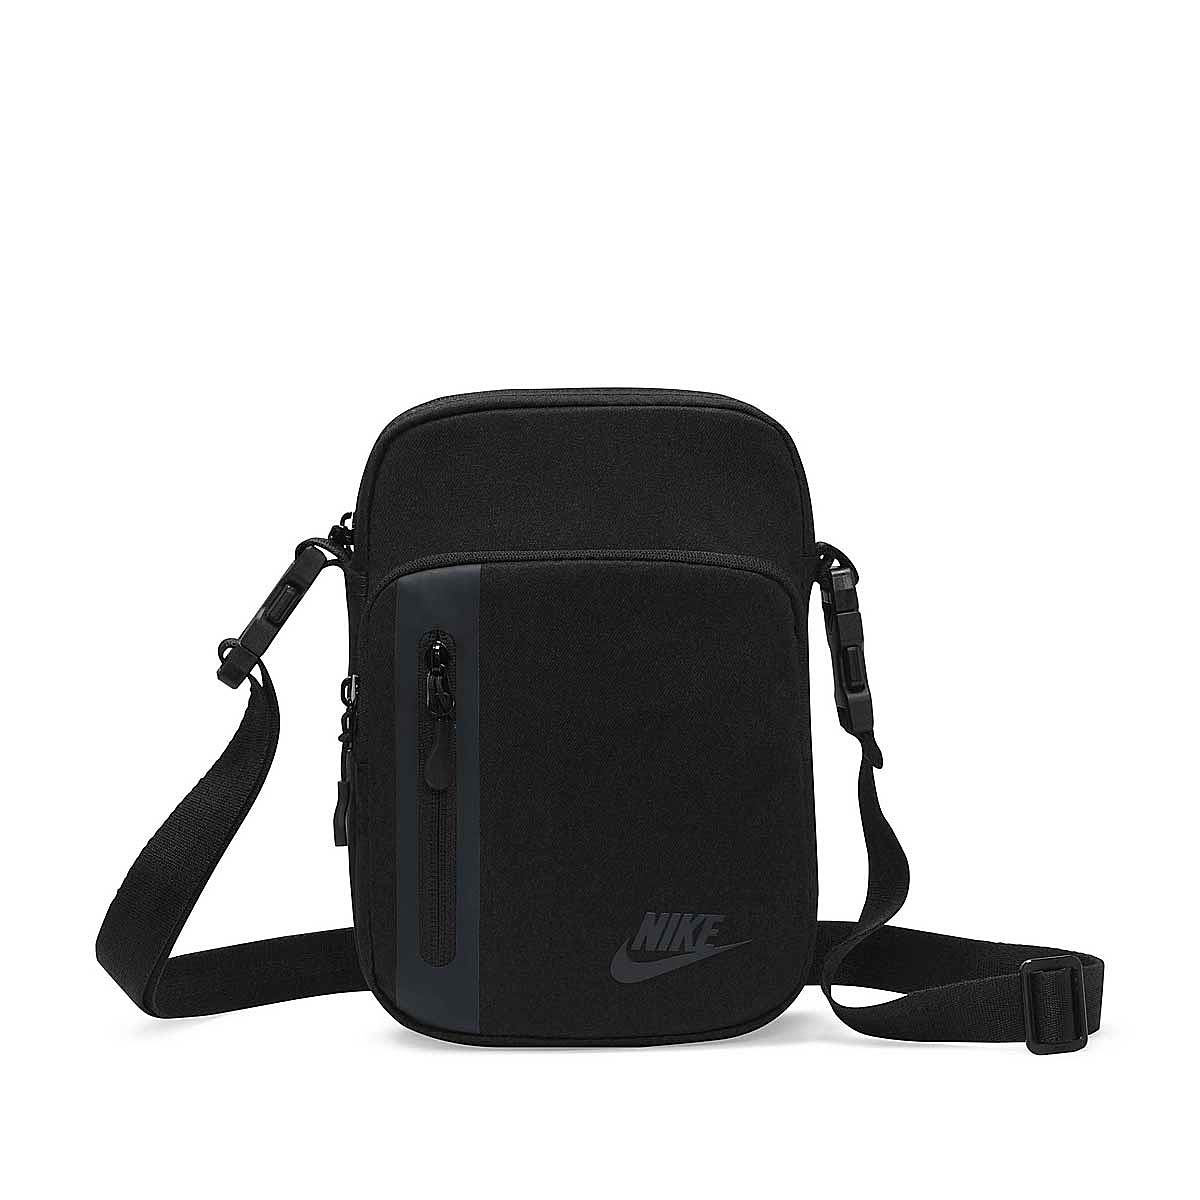 Nike Elemental Premium Small Item Bag, Black/black/(anthracite) ONE